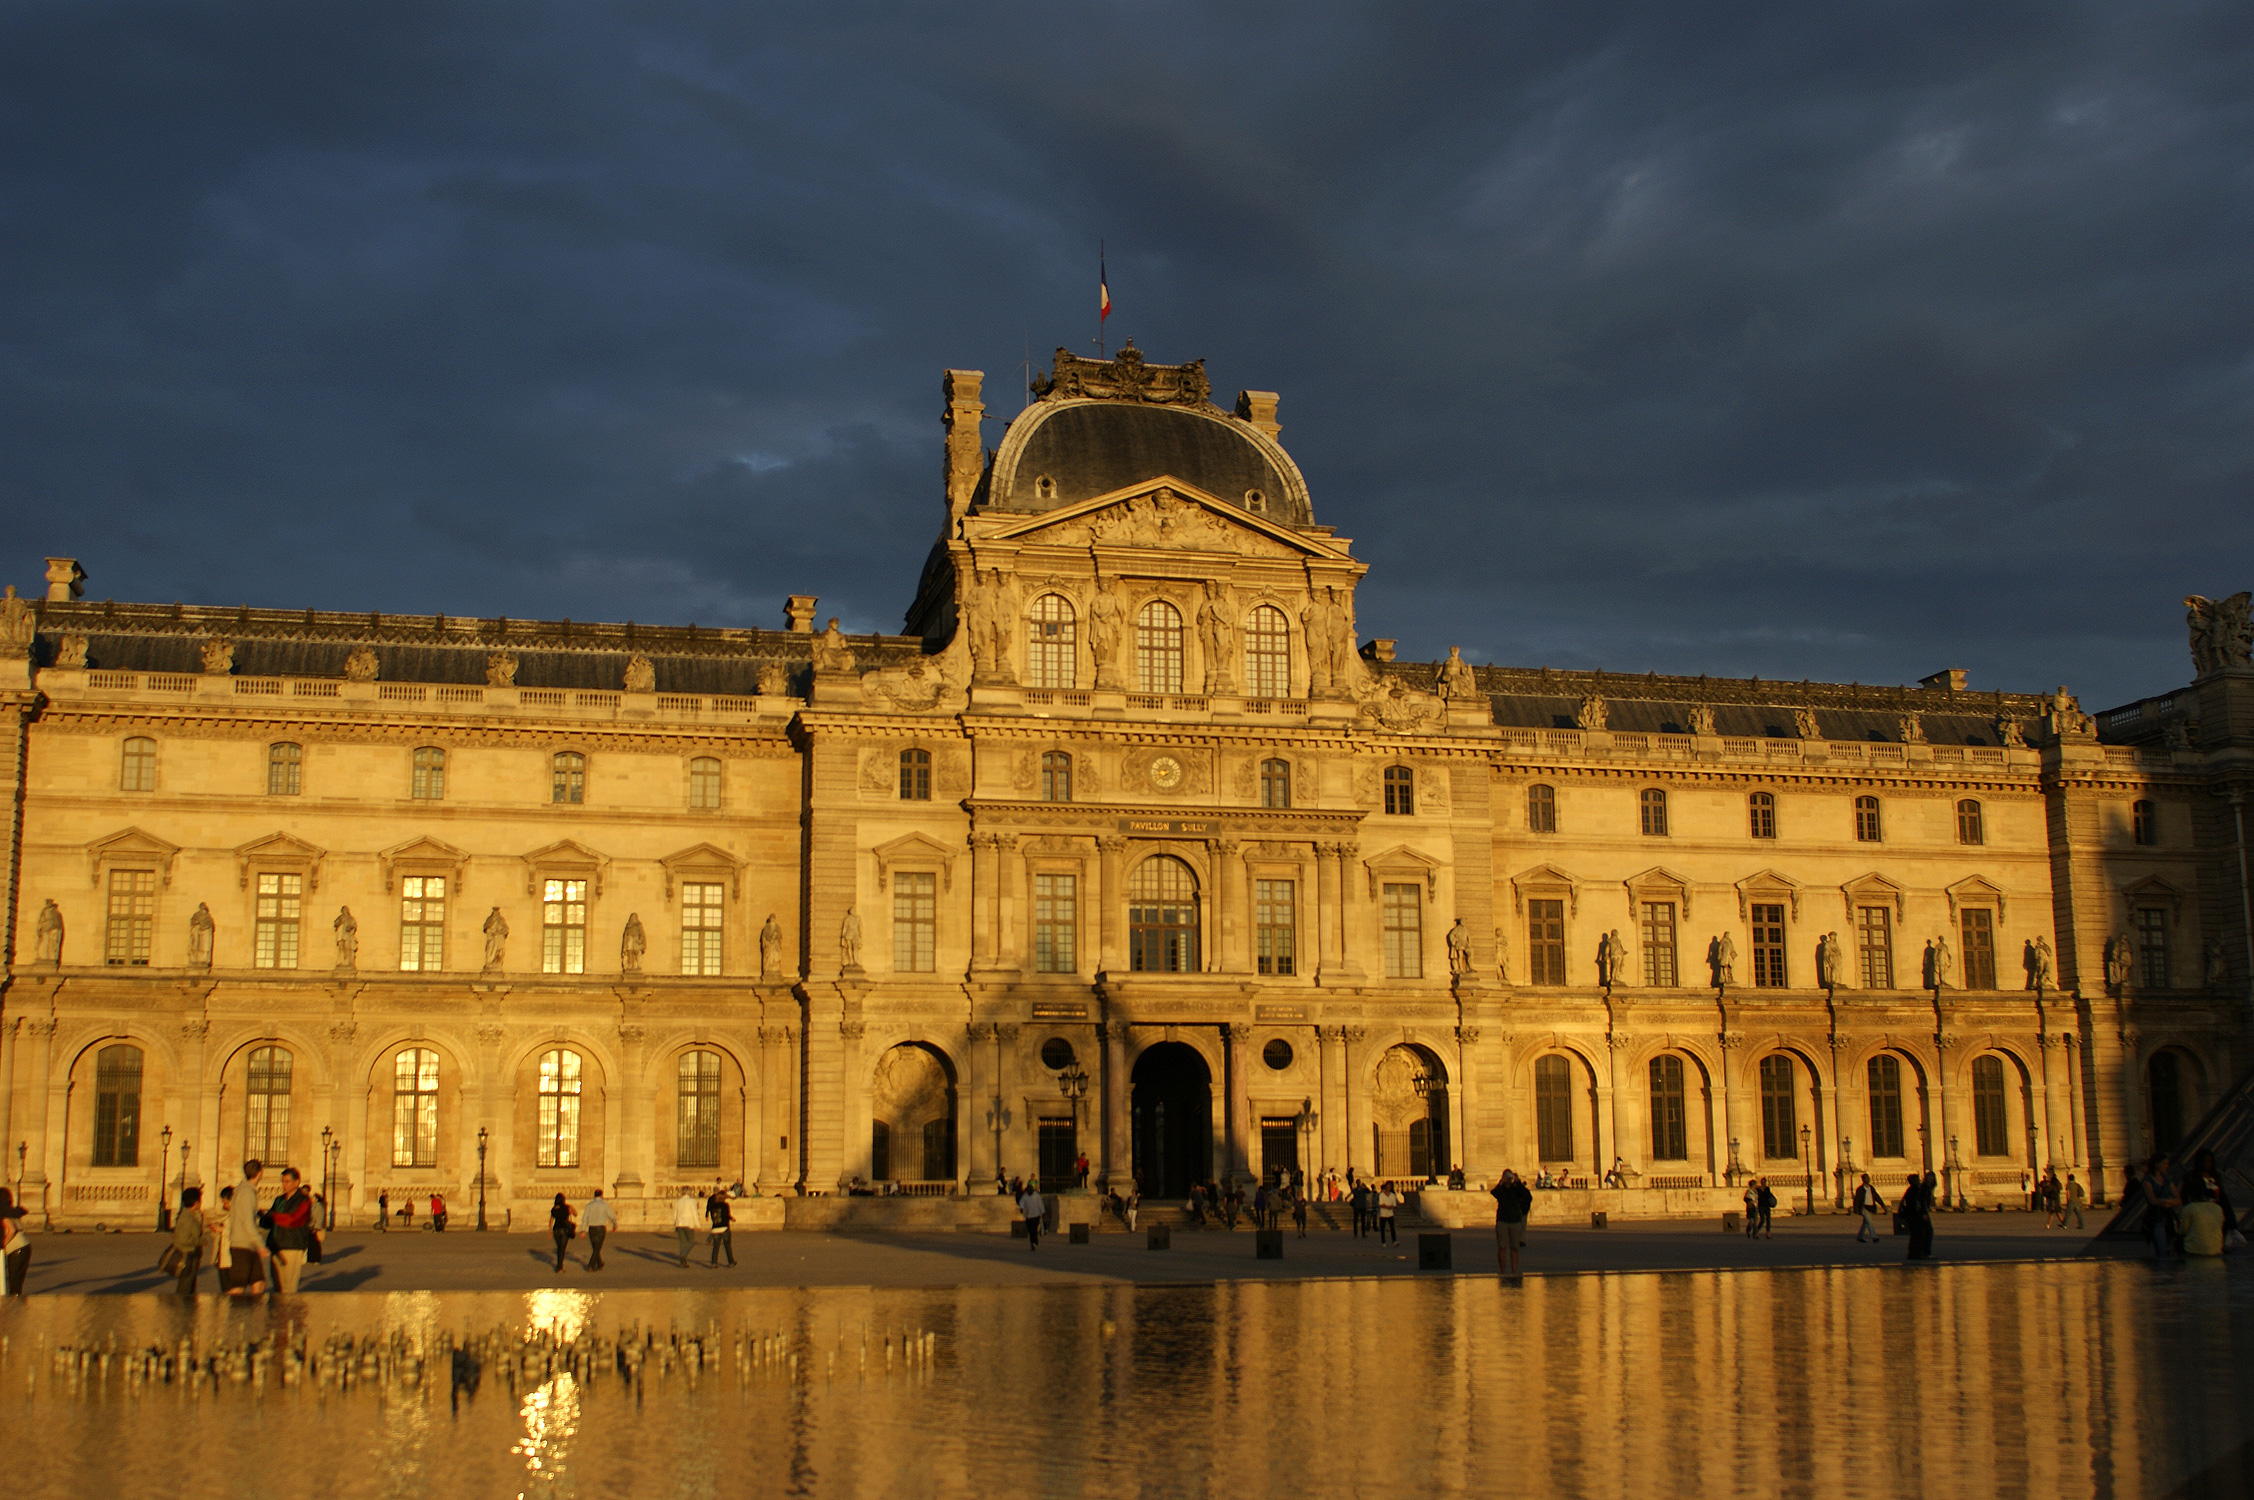 De louvre. Дворец-музей Лувр в Париже. Королевский дворец Лувр. Лувр дворец французских королей. Луврский дворец Луи лево.